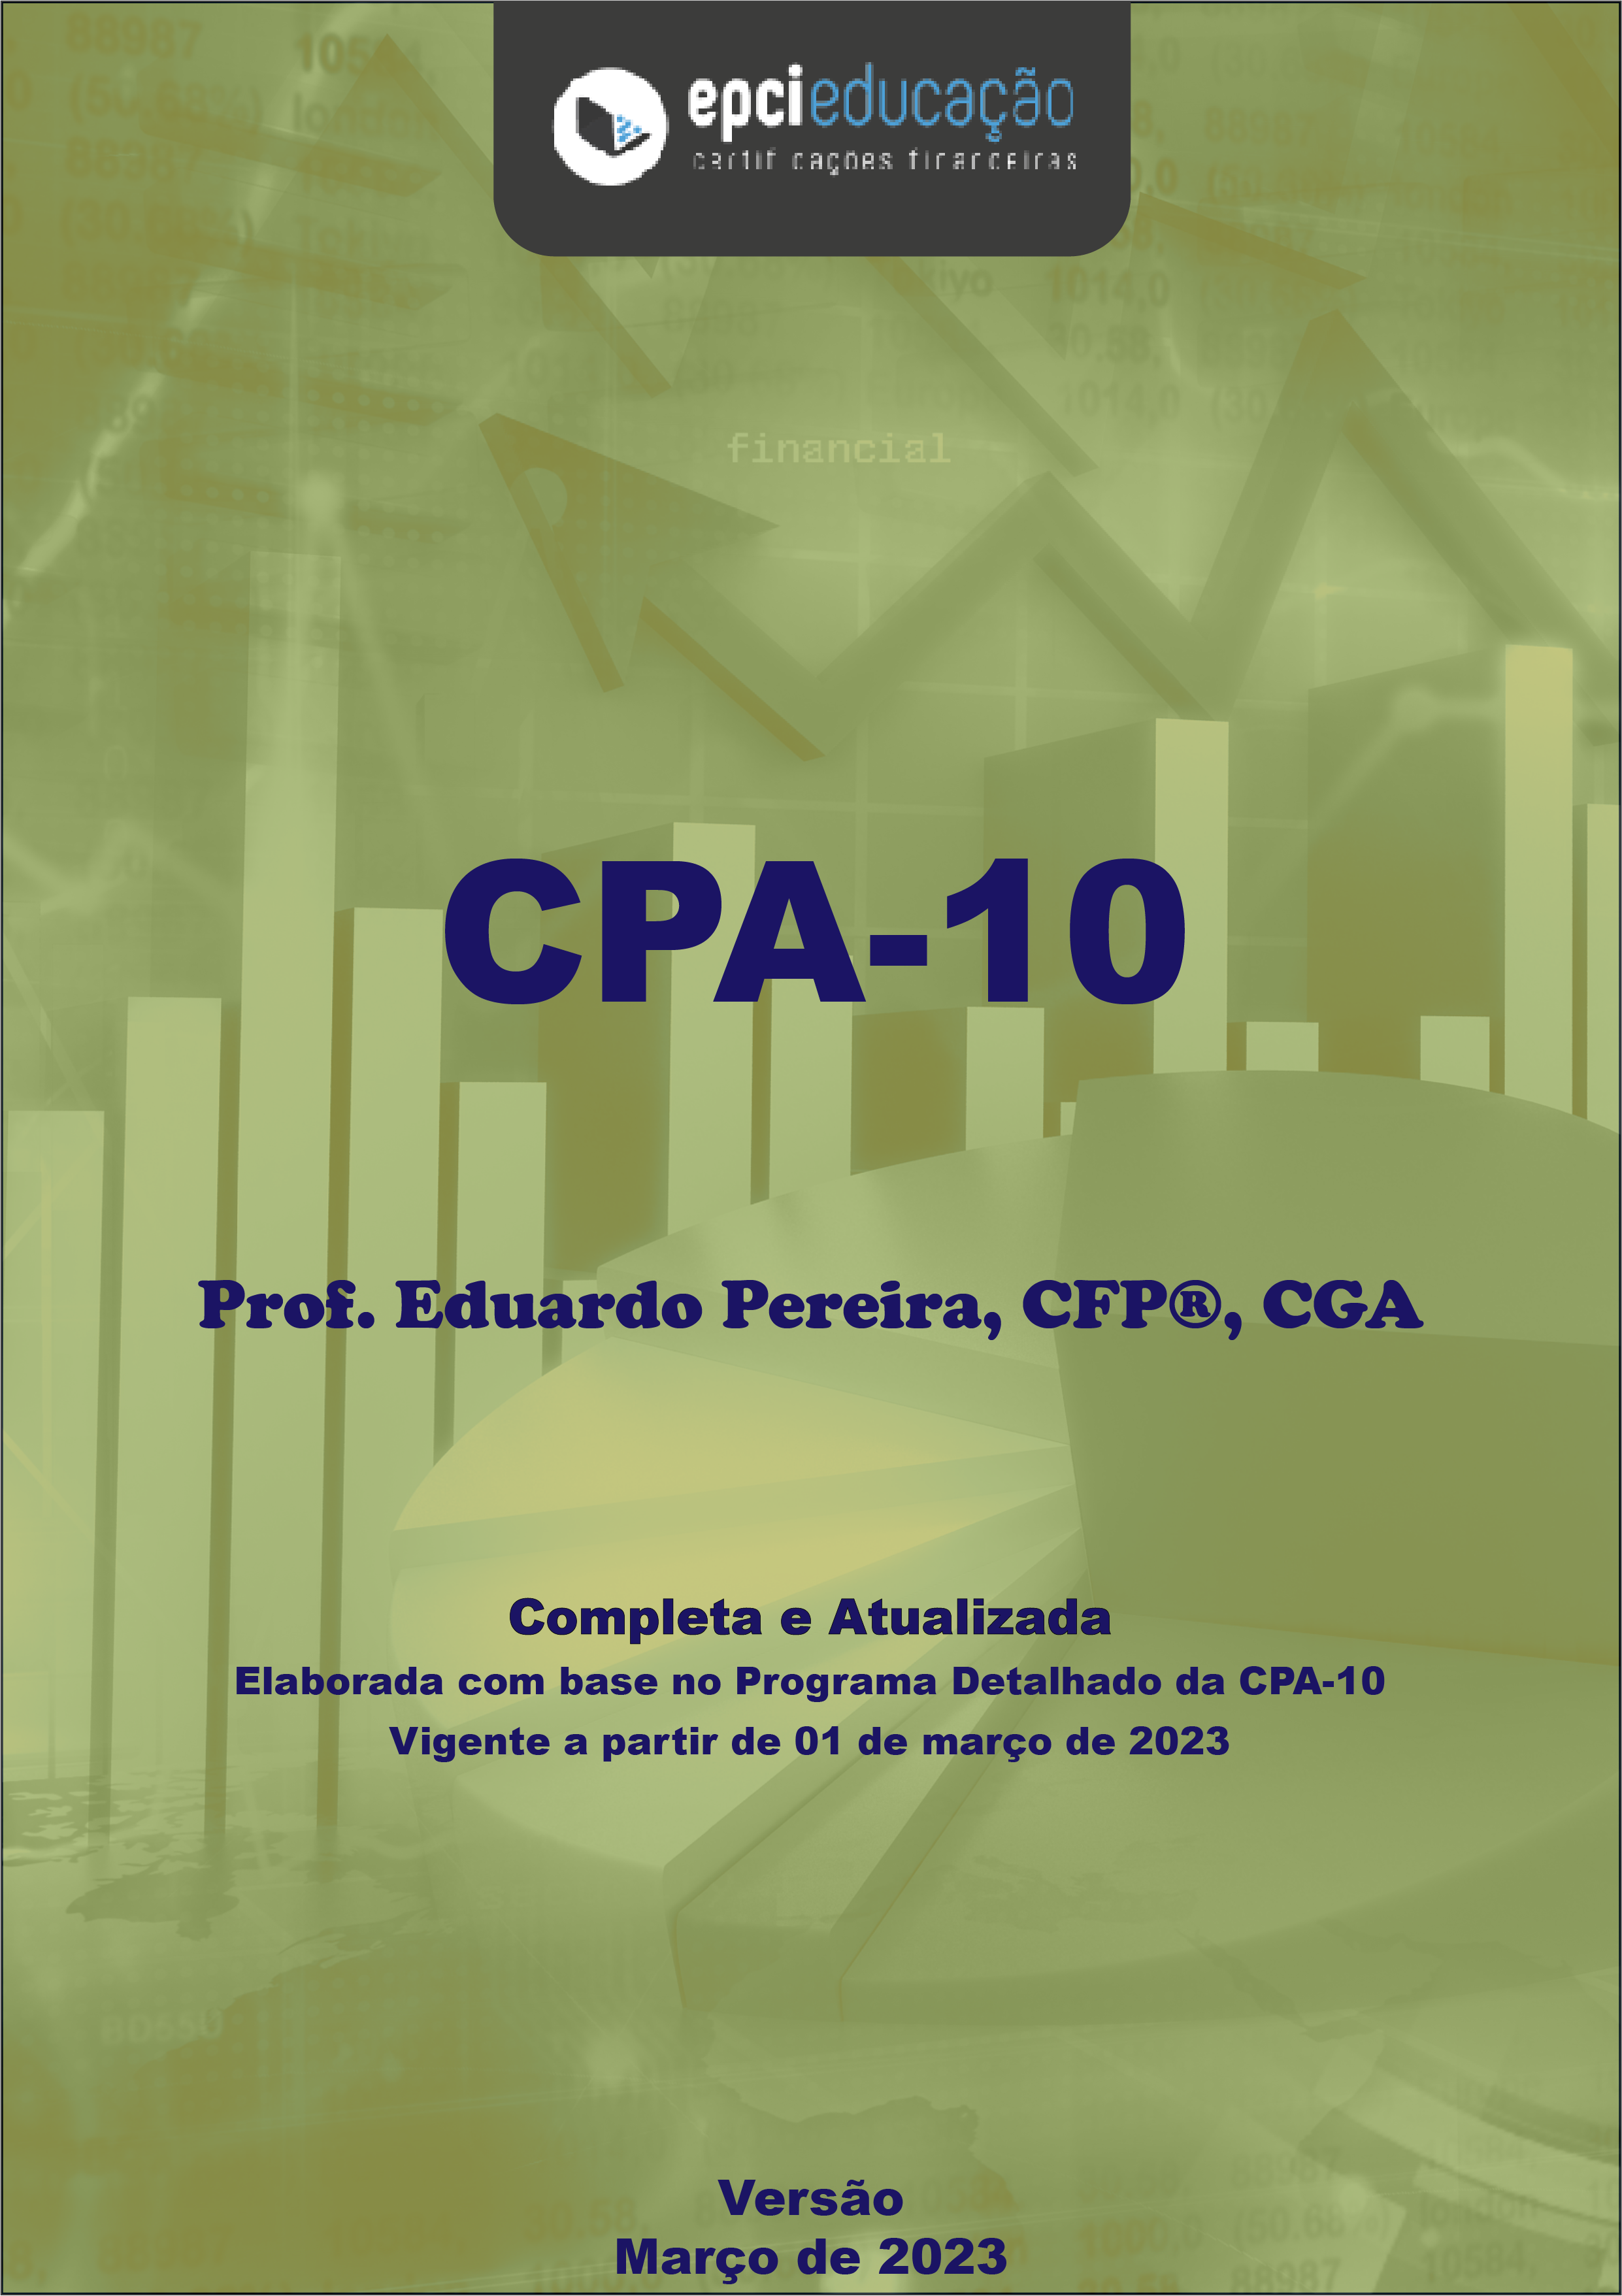 Apostila CPA-10 | Completa e Atualizada